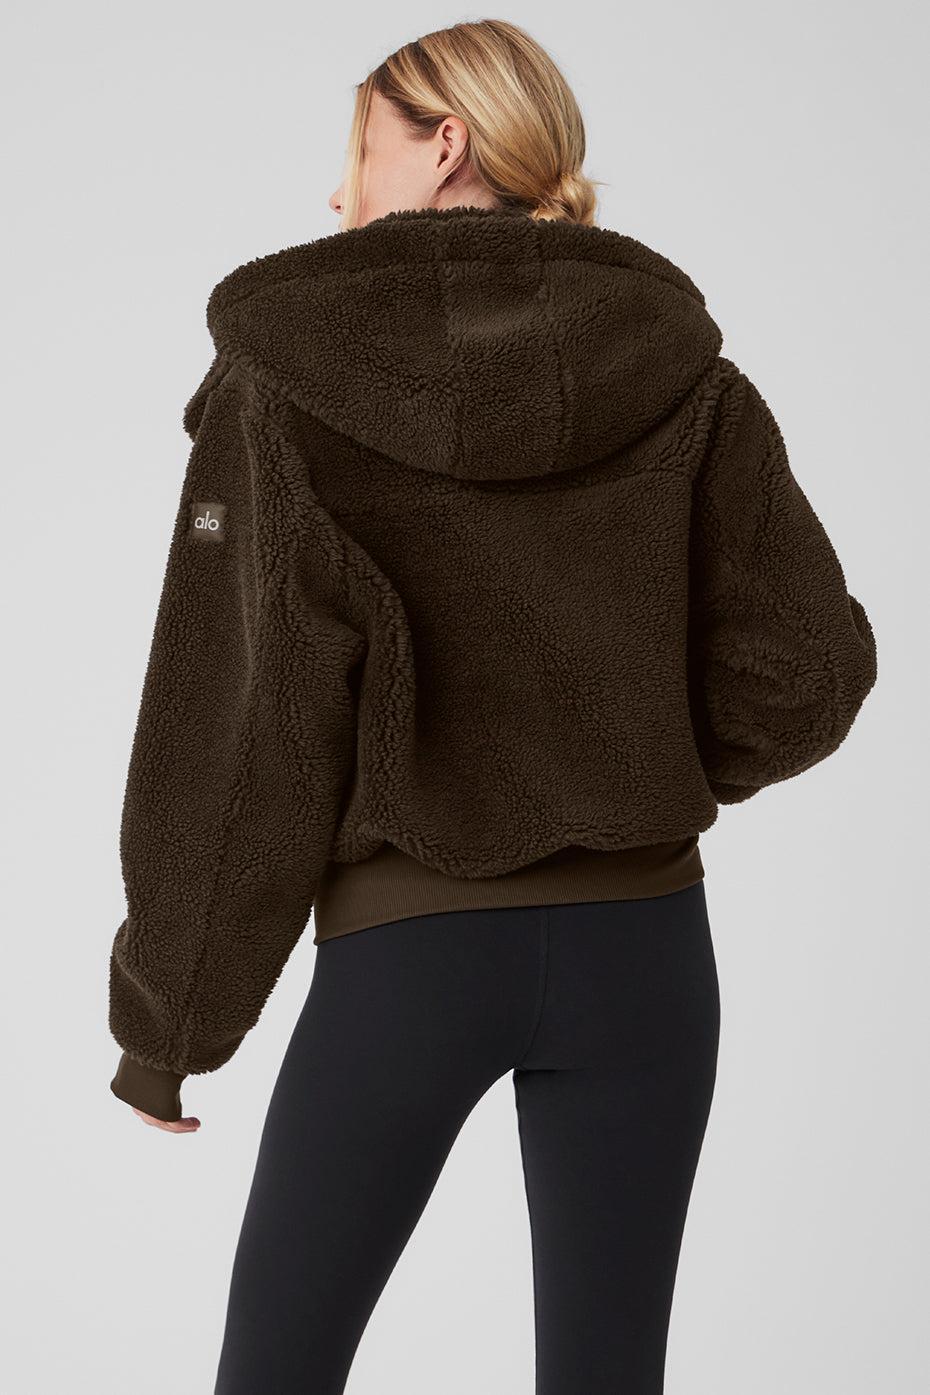 Alo Yoga | Foxy Sherpa Jacket Brown, Size: XS Product Image